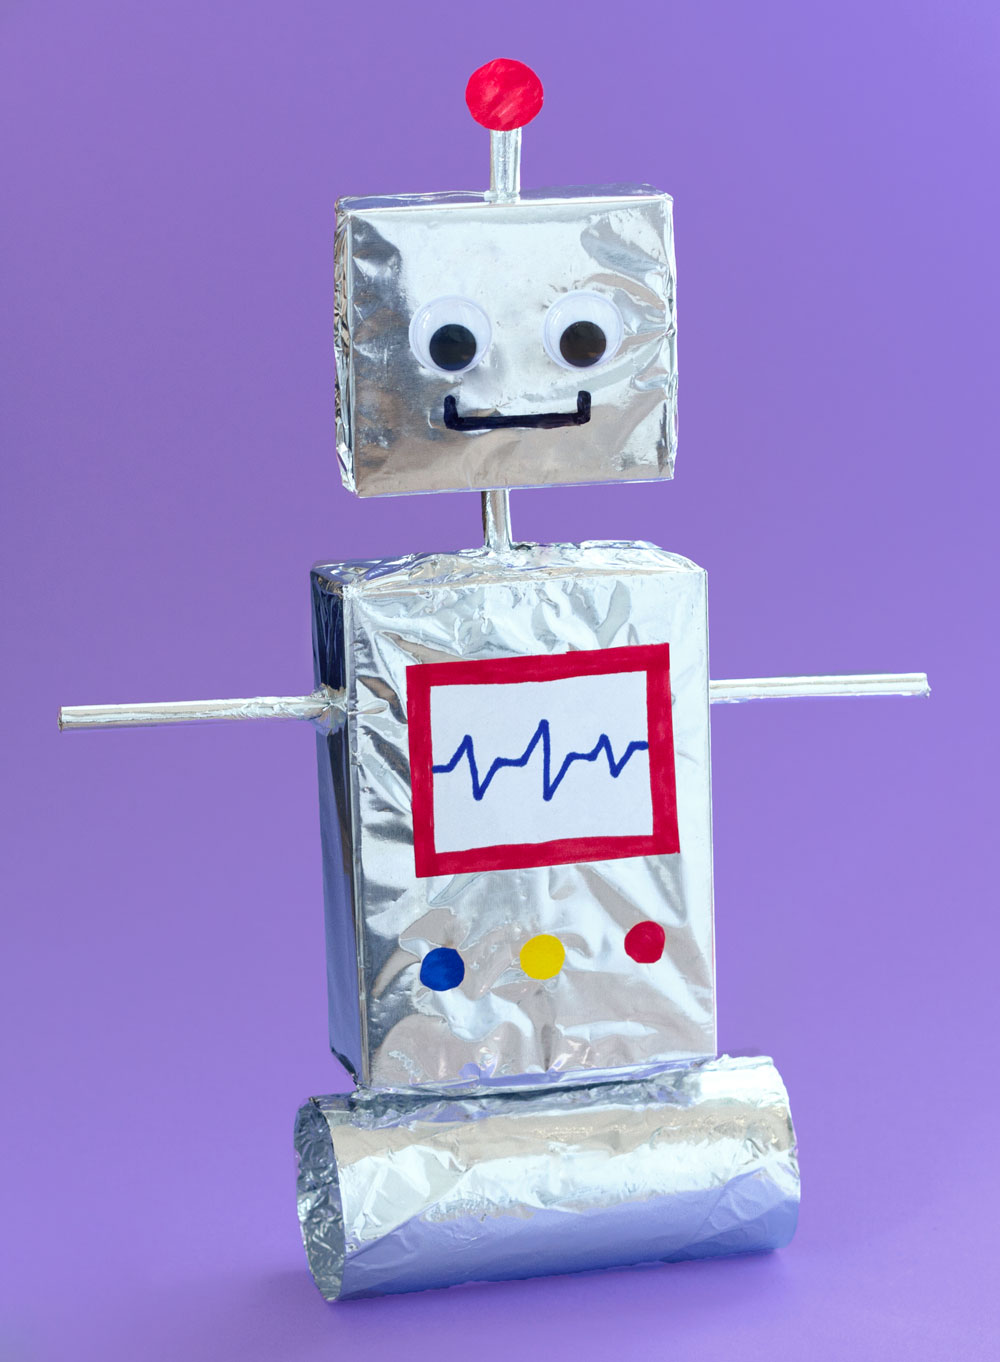 Tin Foil Robot Craft — Doodle and Stitch